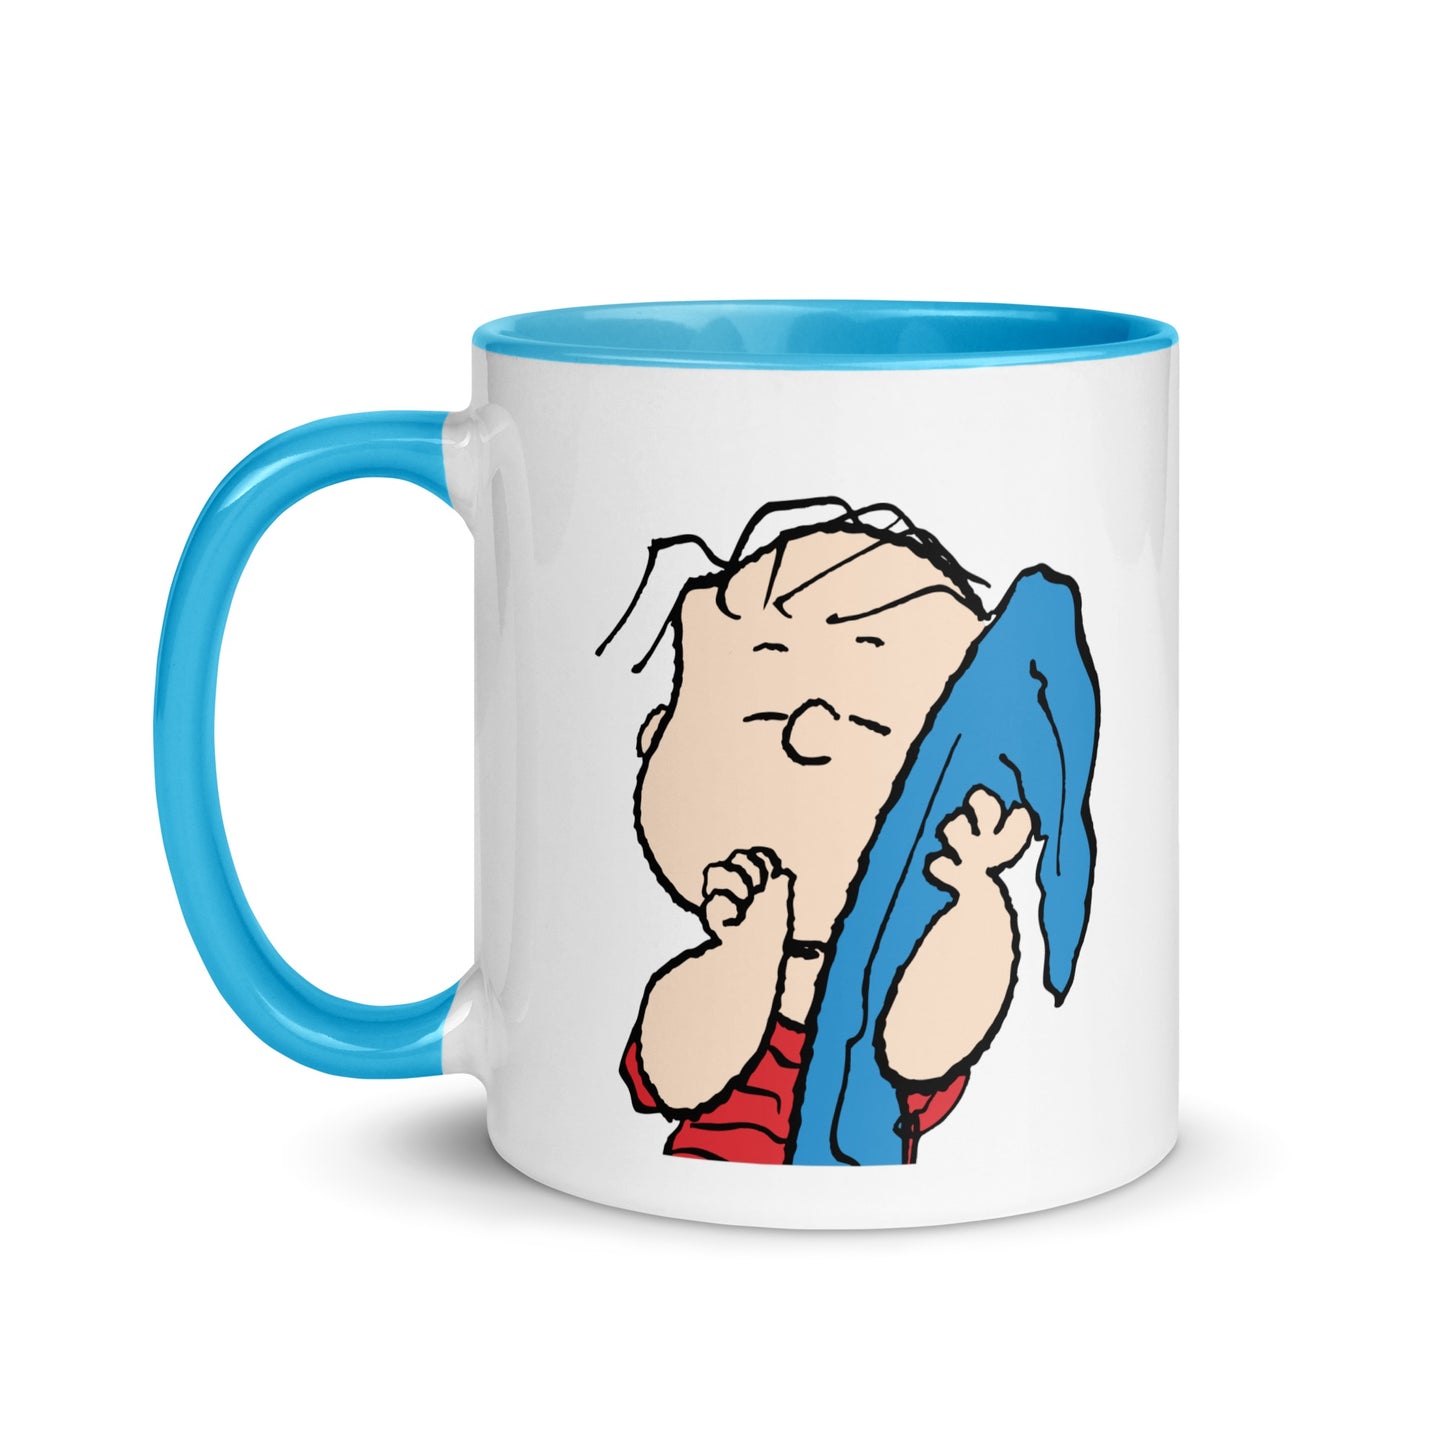 Linus Two Tone Mug